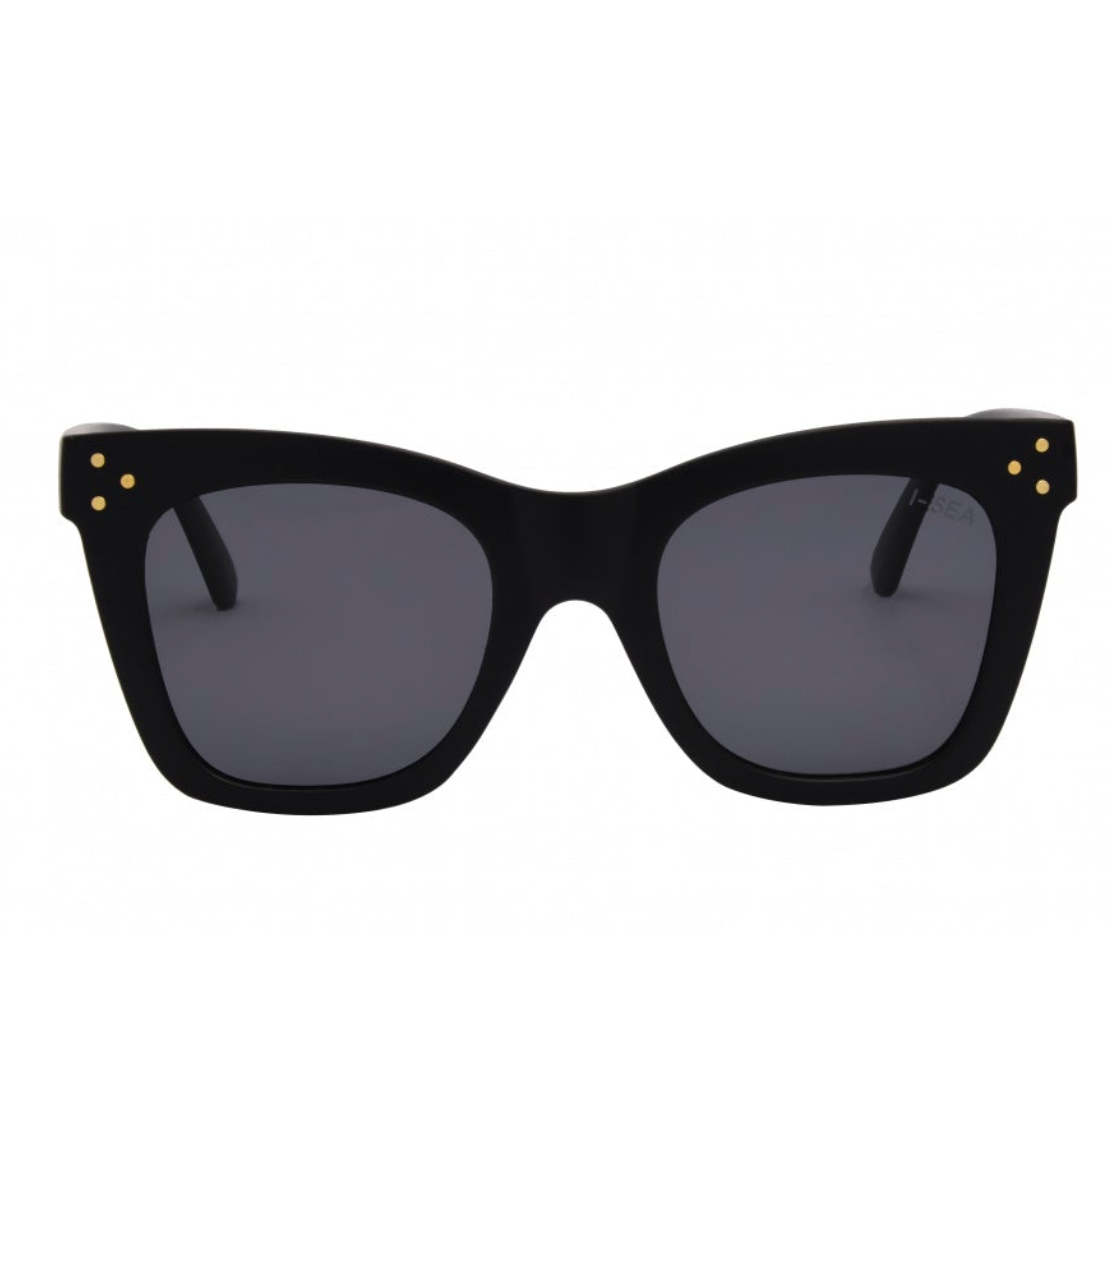 Dylan iSea Sunglasses - Black/Smoke - Clothe Boutique